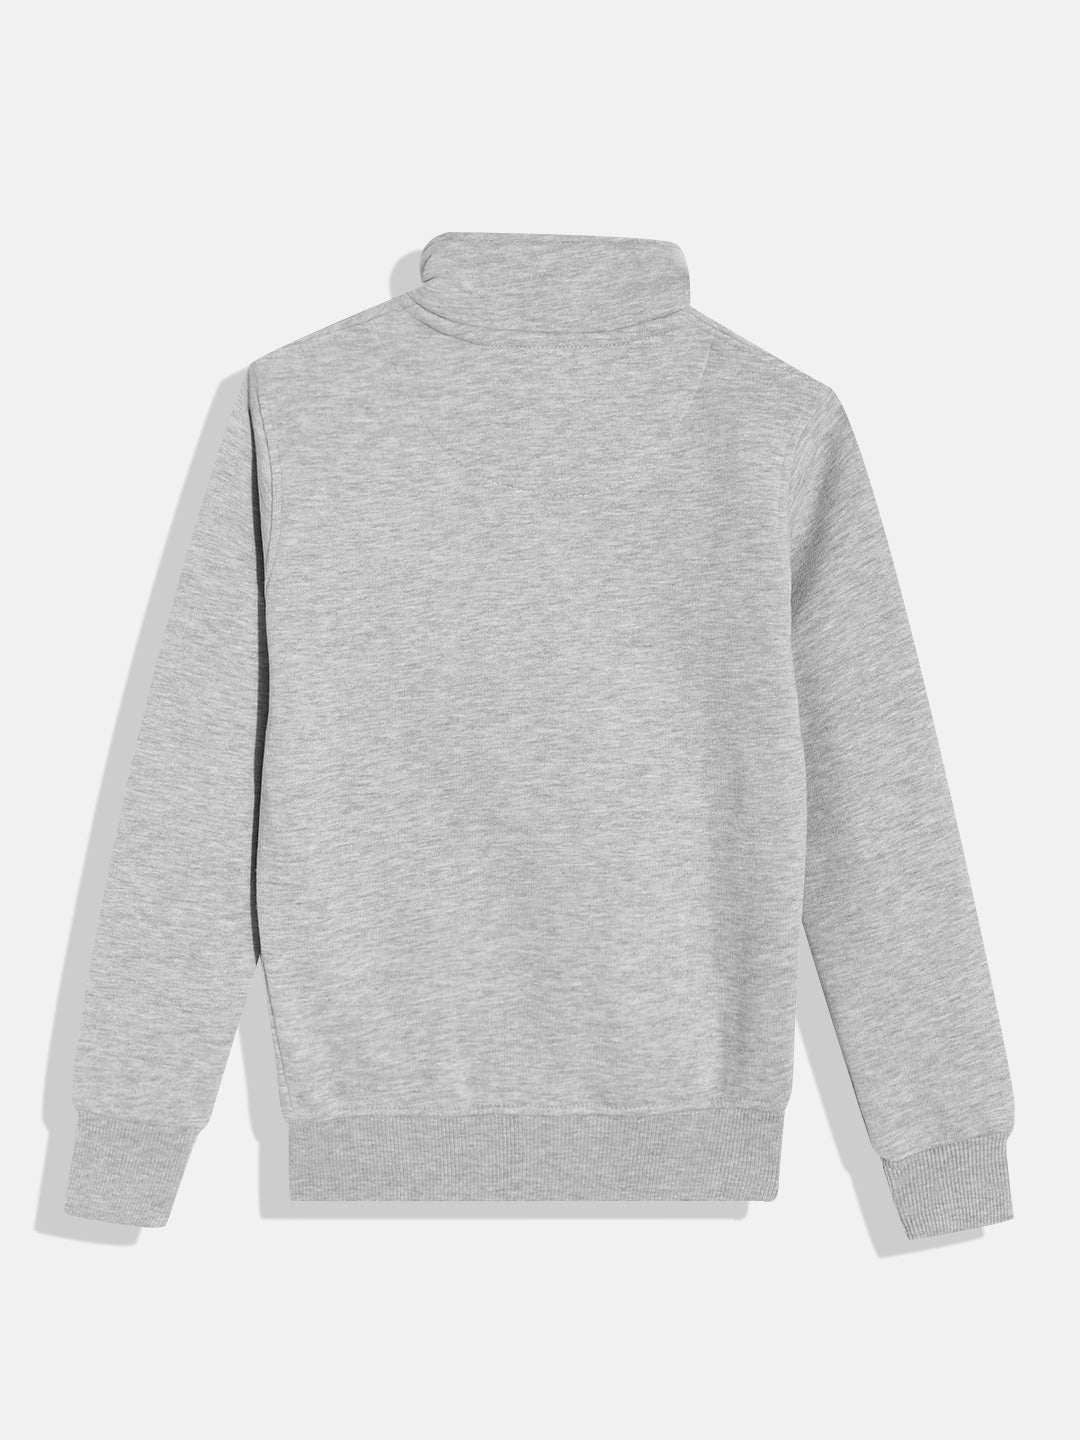 Alcis Boys Grey Melange Solid Sweatshirt